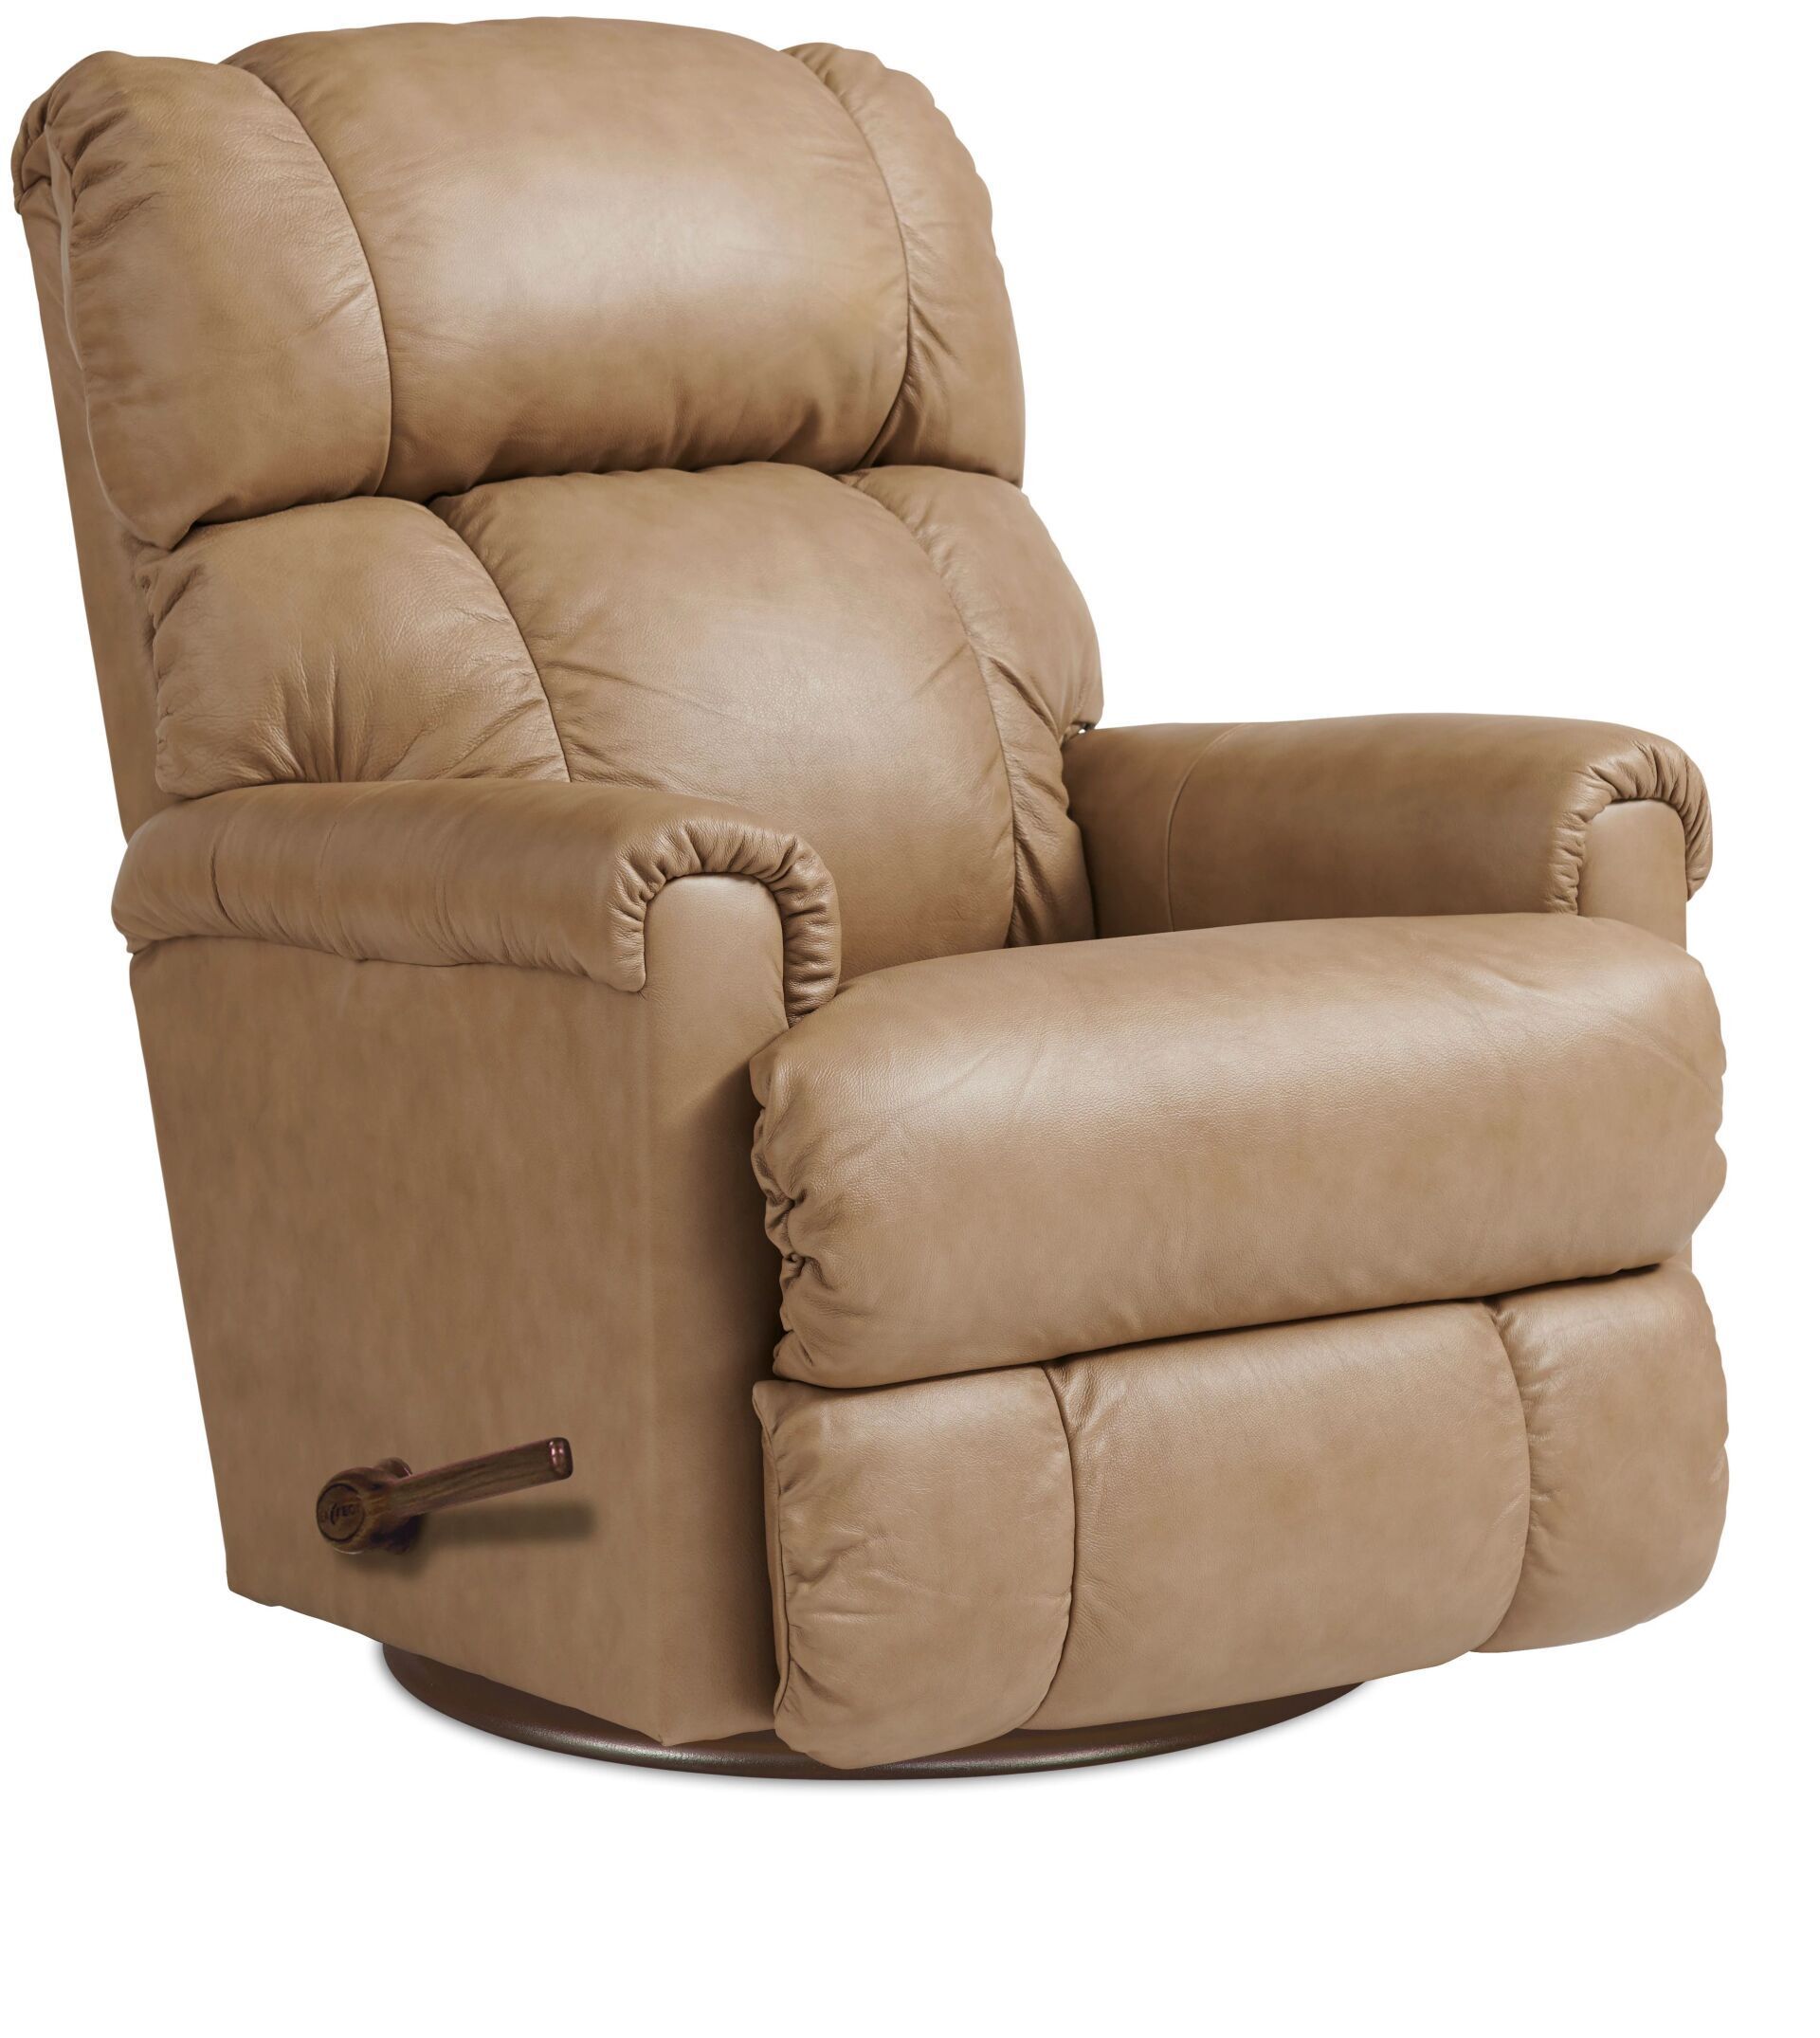 Brown reclining chair